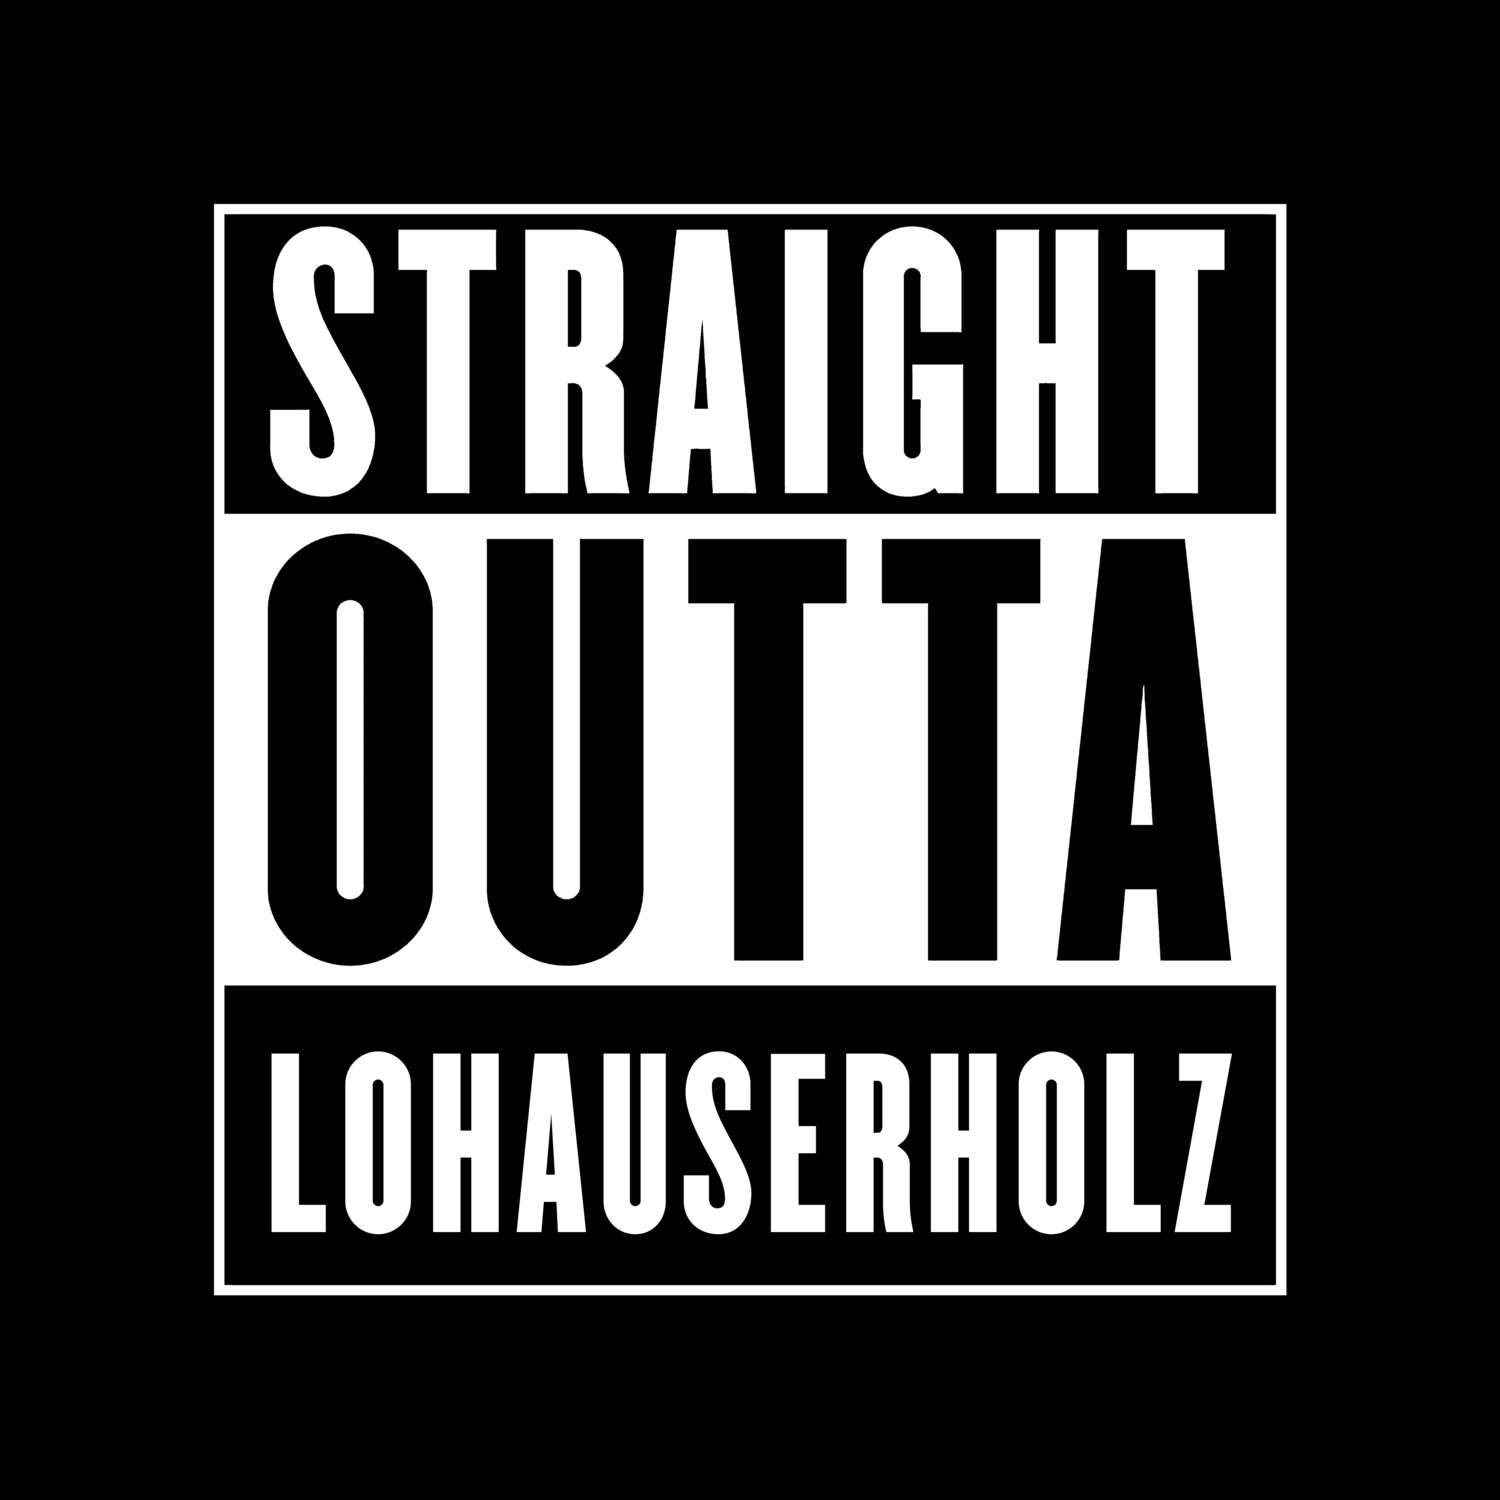 Lohauserholz T-Shirt »Straight Outta«